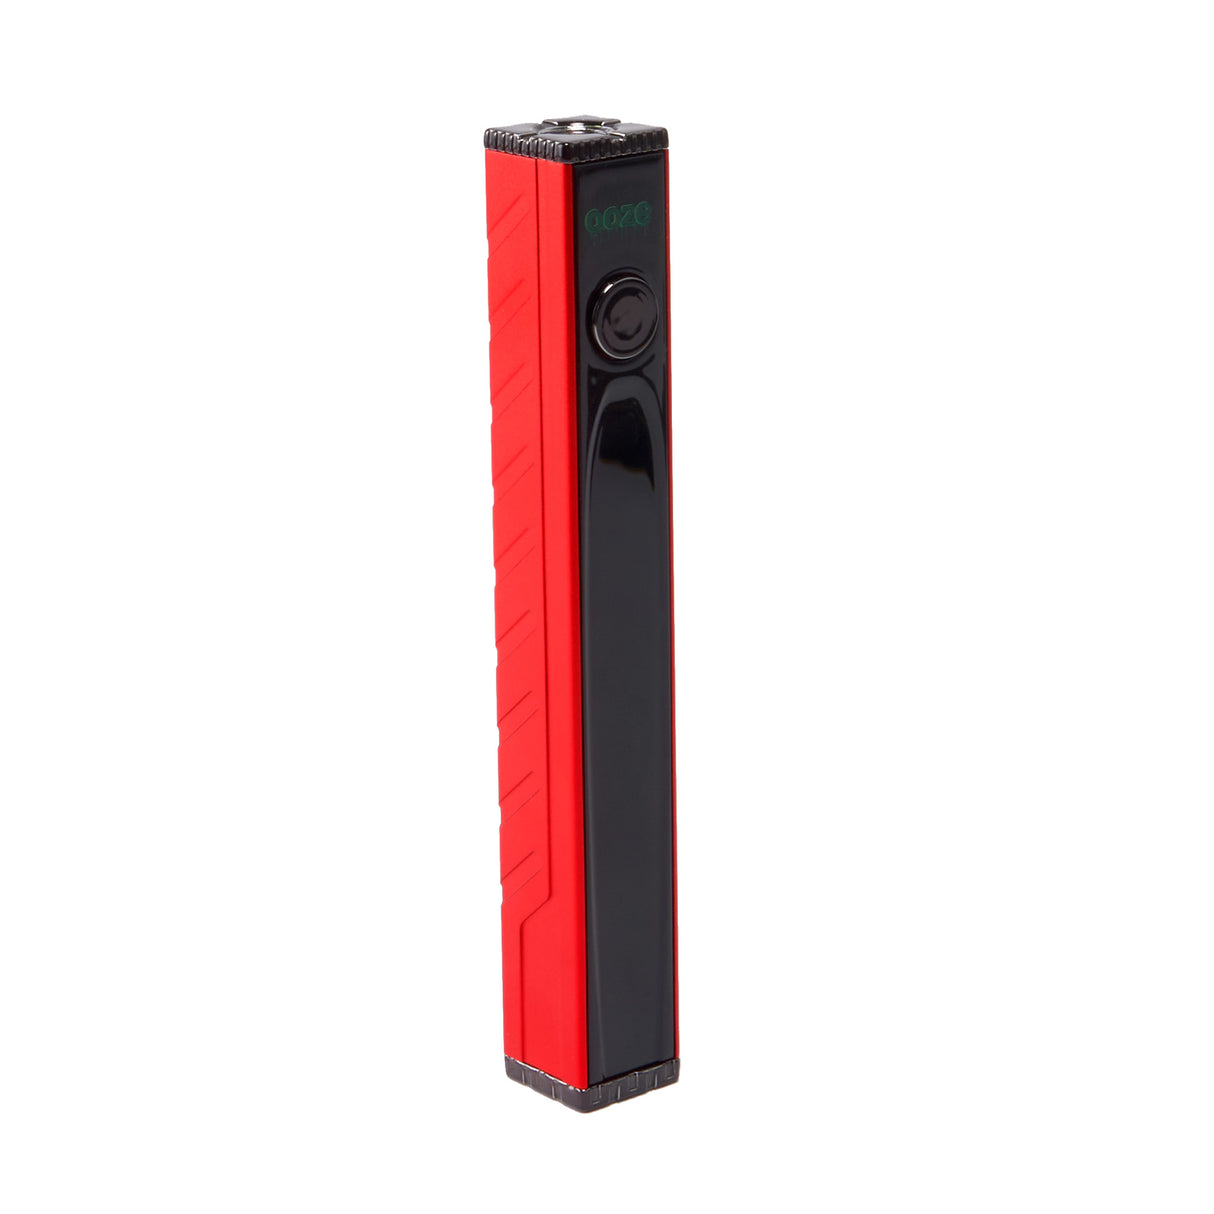 Ooze Quad 2 – 500 mAh Square Vape Battery – Ruby Red